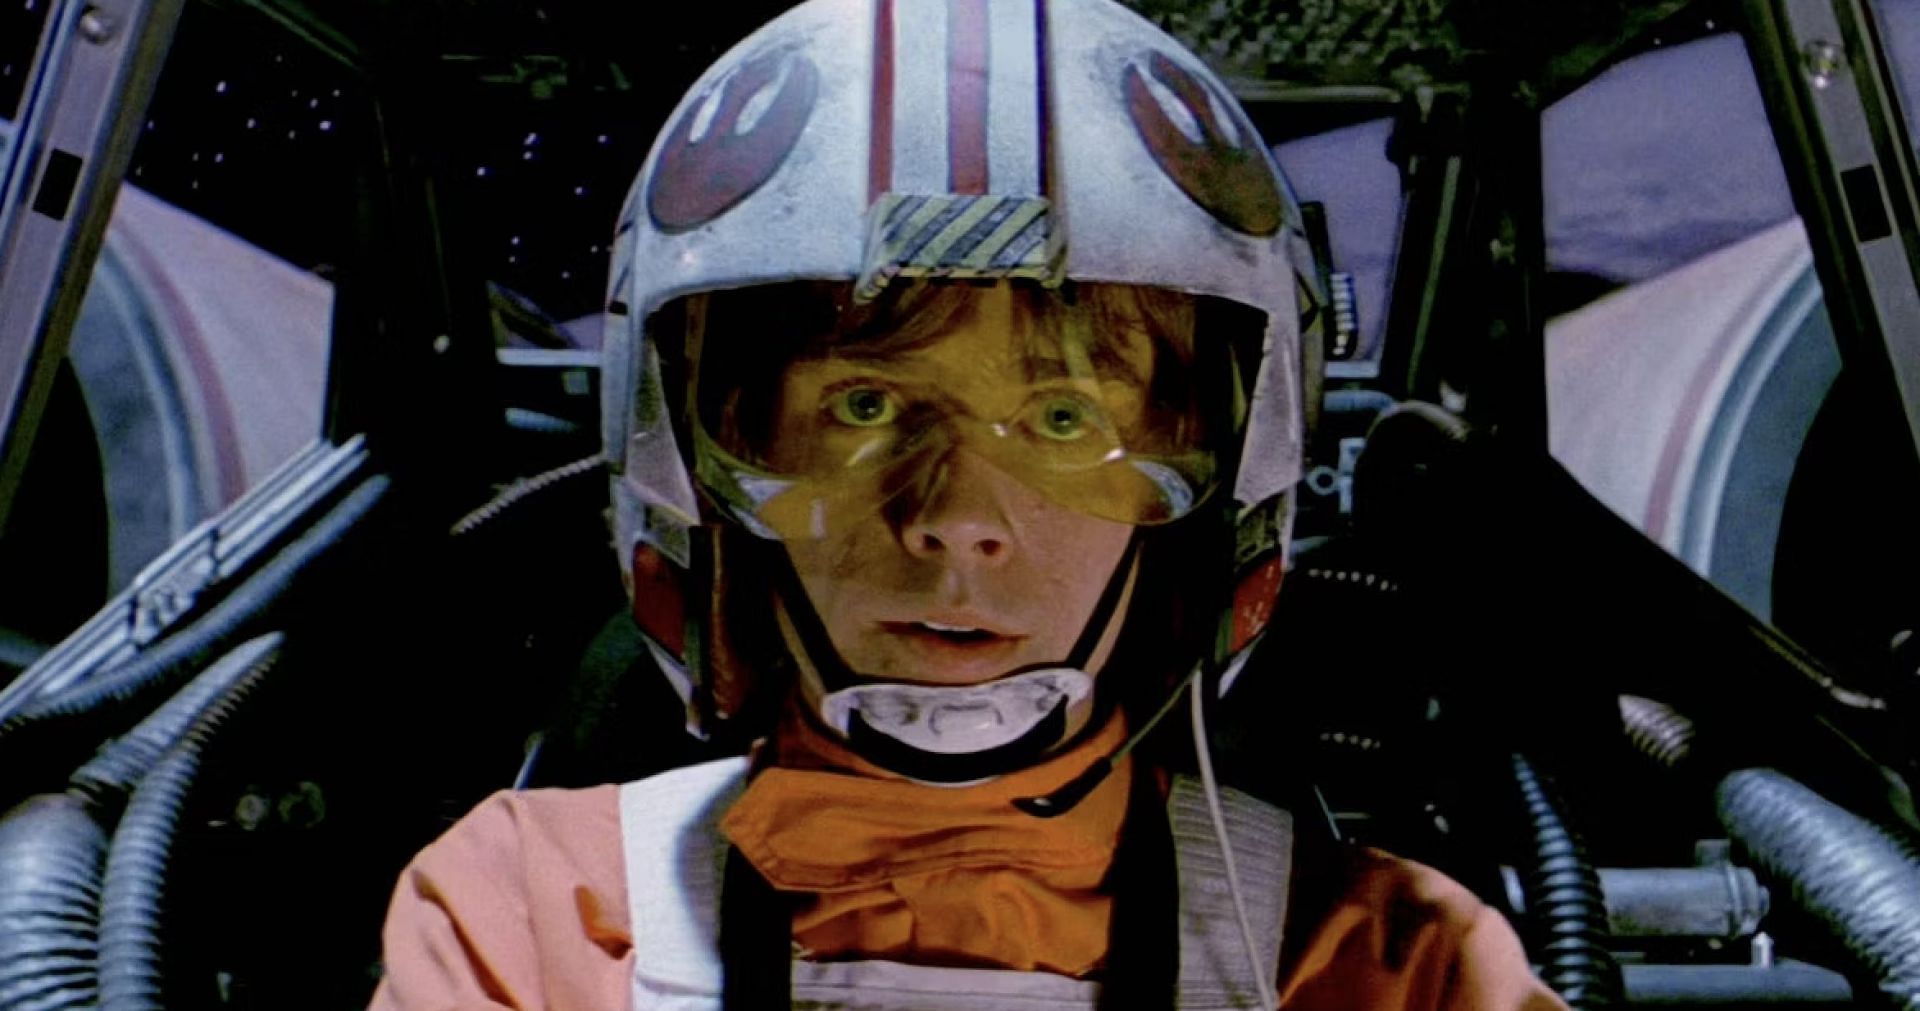 Luke Skywalker prepares to make the shot that will destroy the Death Star (Image via Lucasfilm)